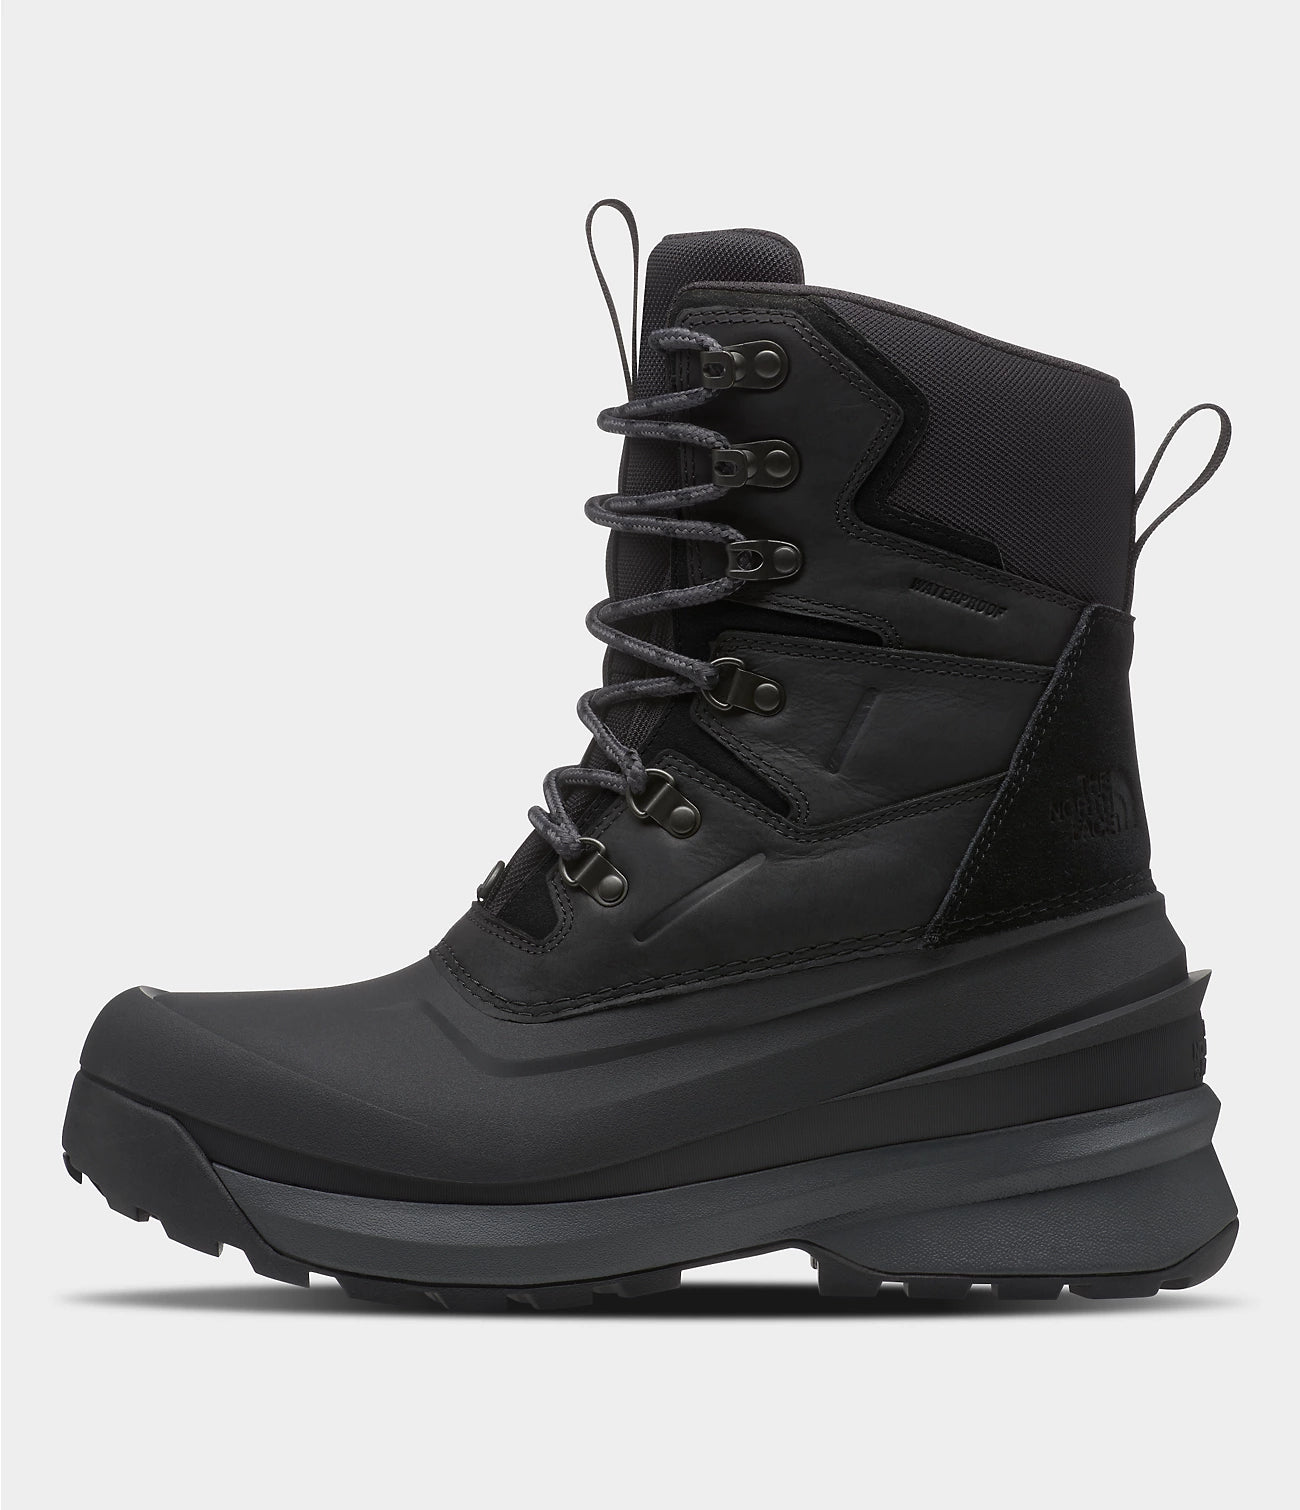 Men’s Chilkat V 400 Waterproof Boots- TNF BLACK